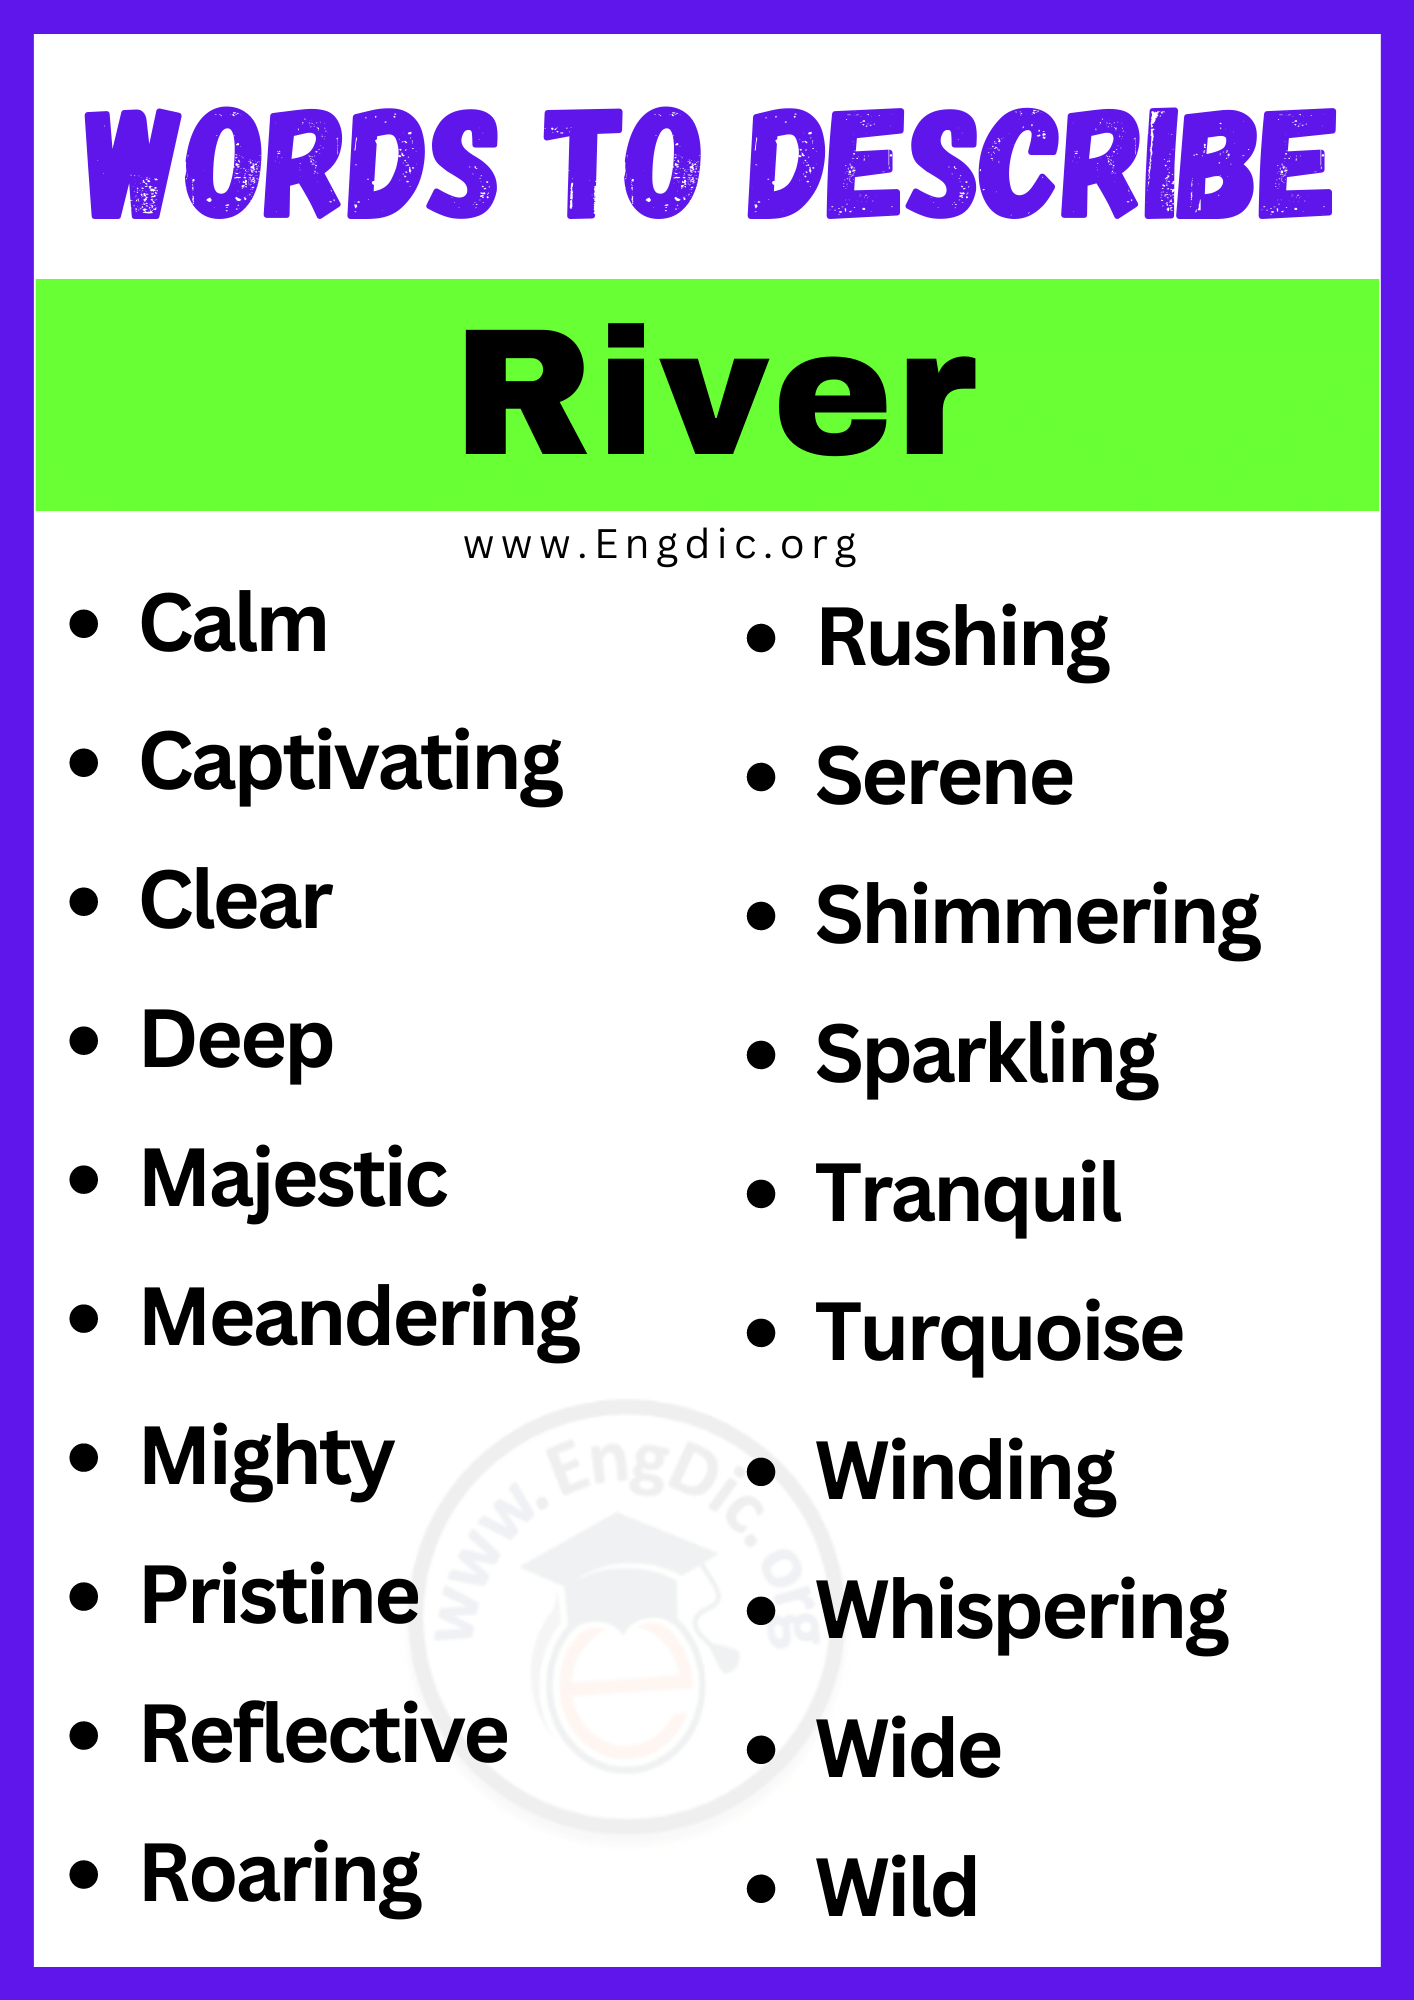 Words to Describe River